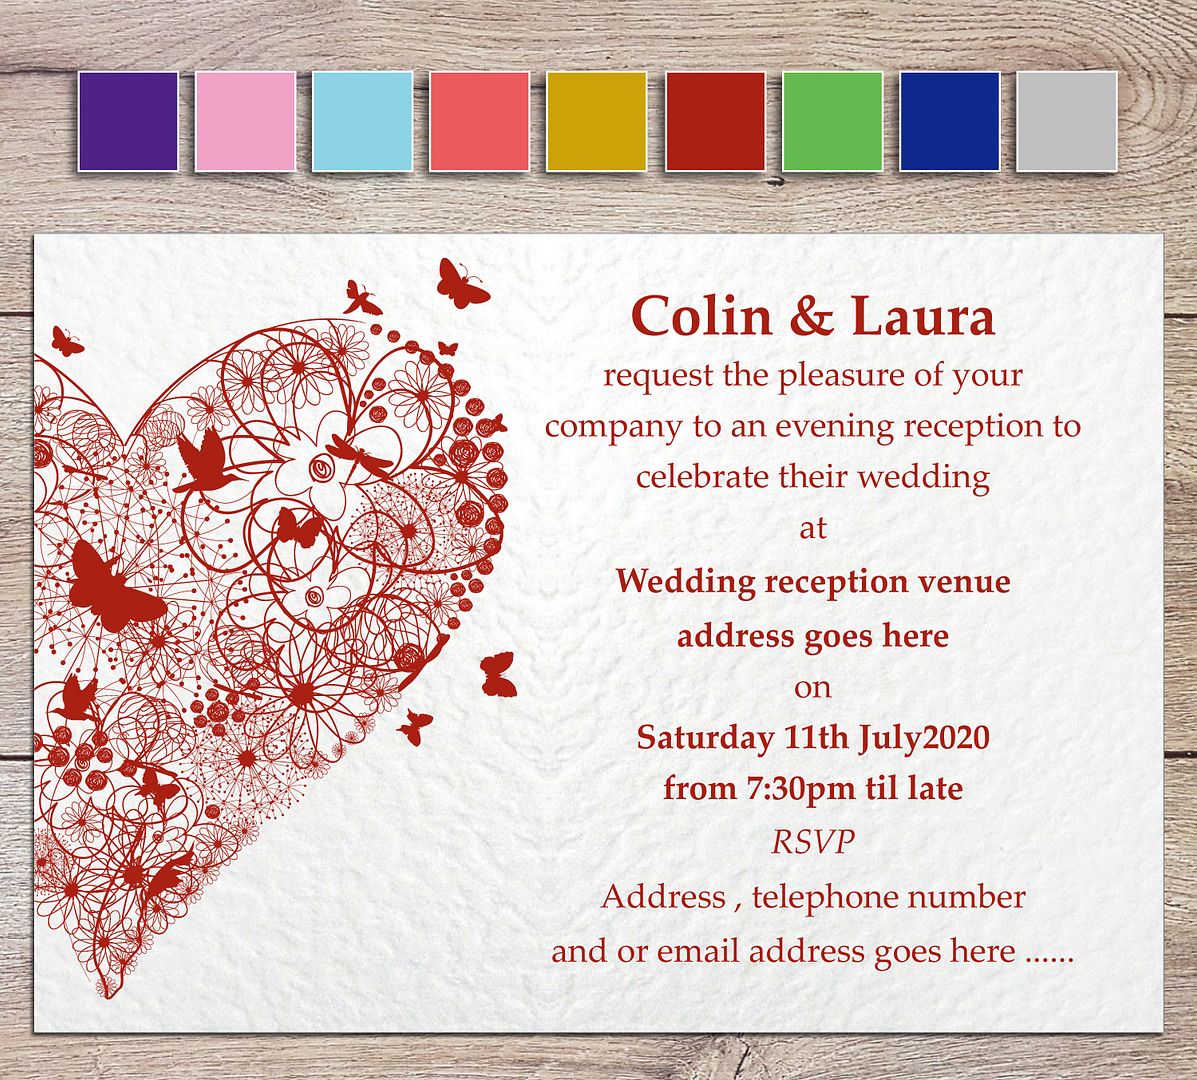 Maroon personalised wedding invite or evening invitation handmade with white envelopes